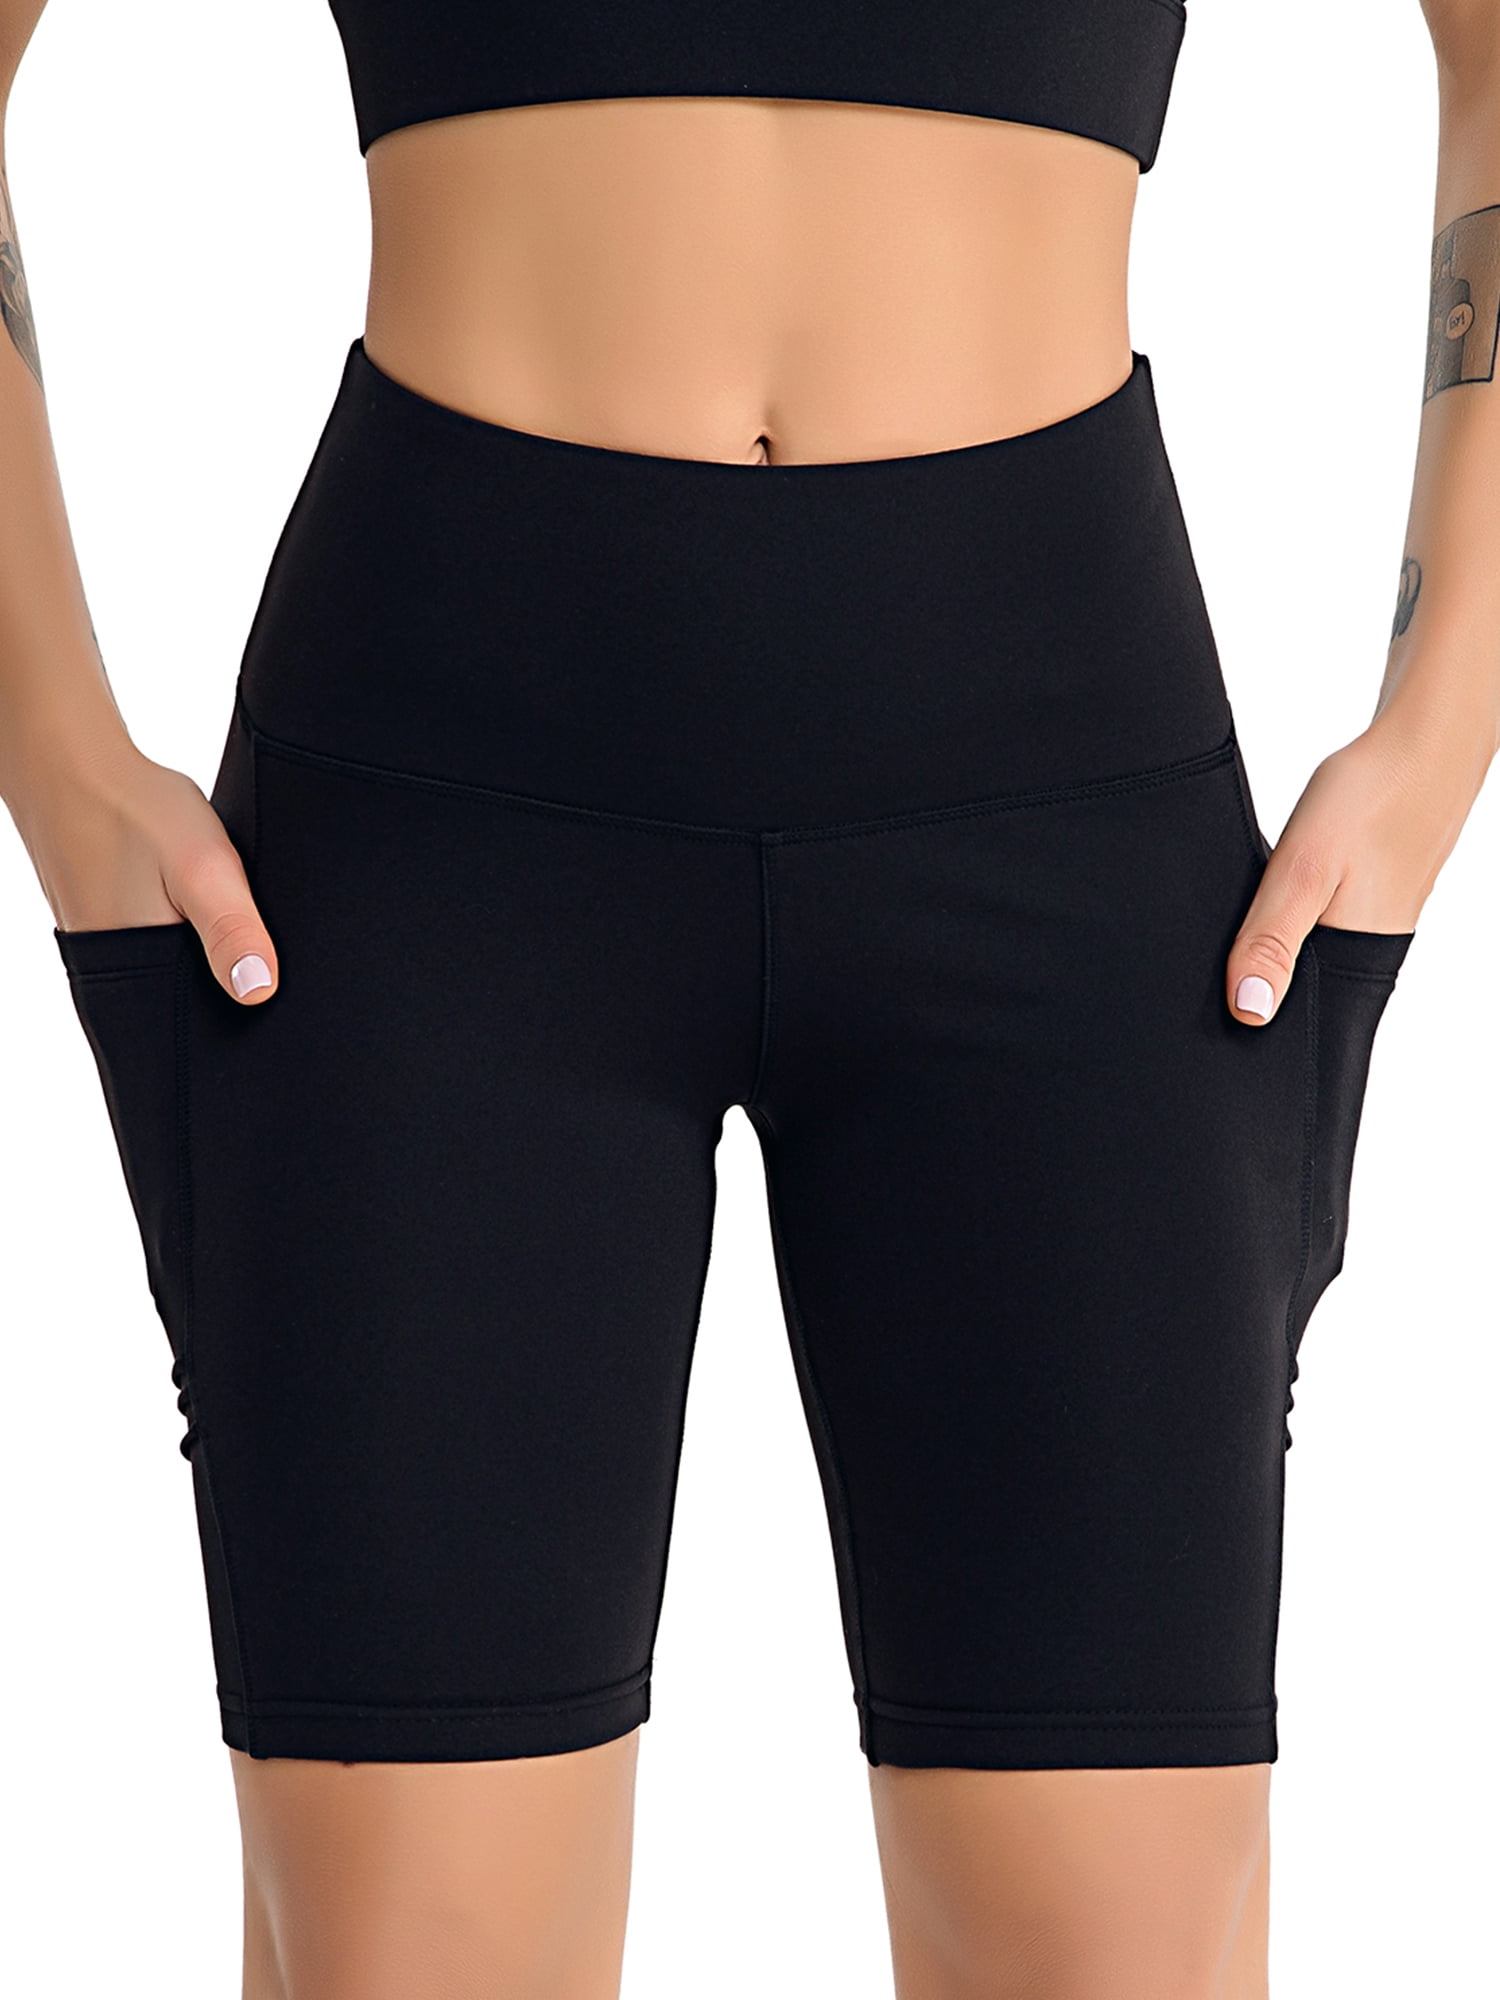 Pants UNIQUE STYLES ASFOOR Bootcut Yoga Pants for Women High Waist ...